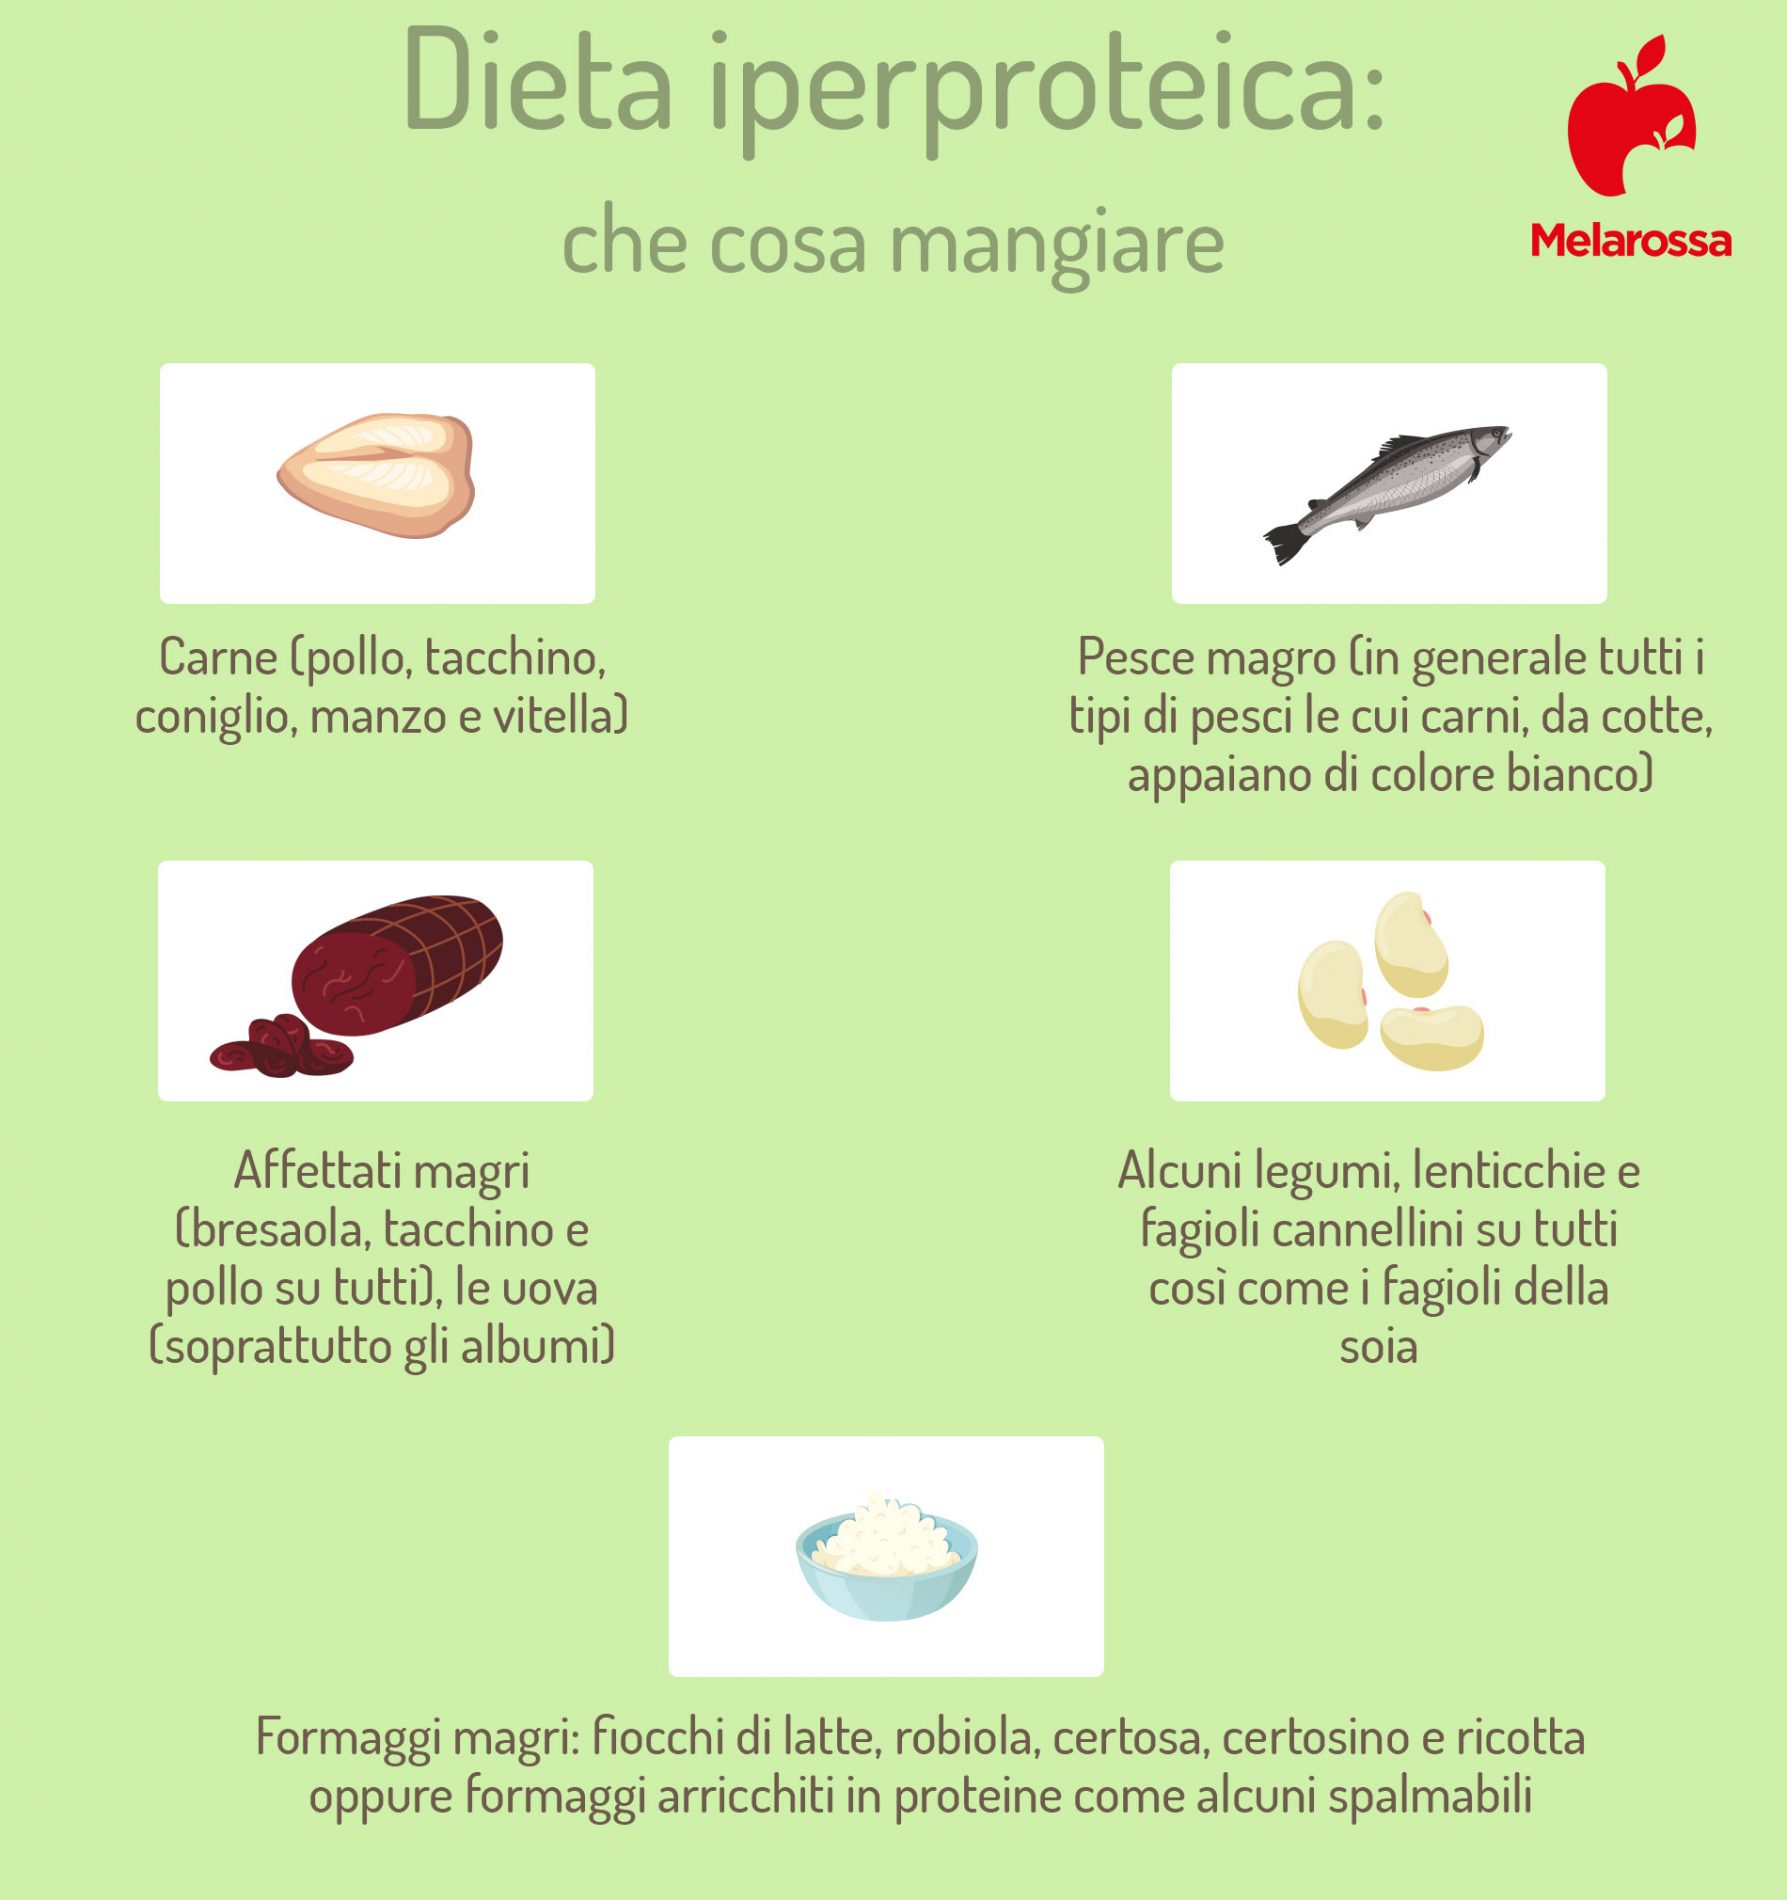 dieta iperproteica: che cosa mangiare